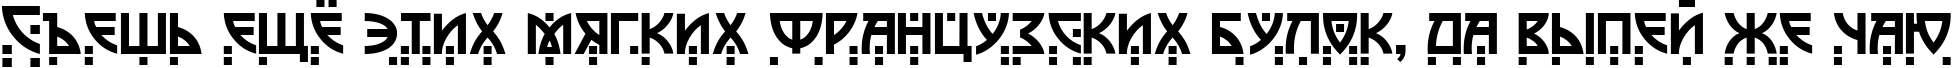 Пример написания шрифтом Postmodern Two текста на русском